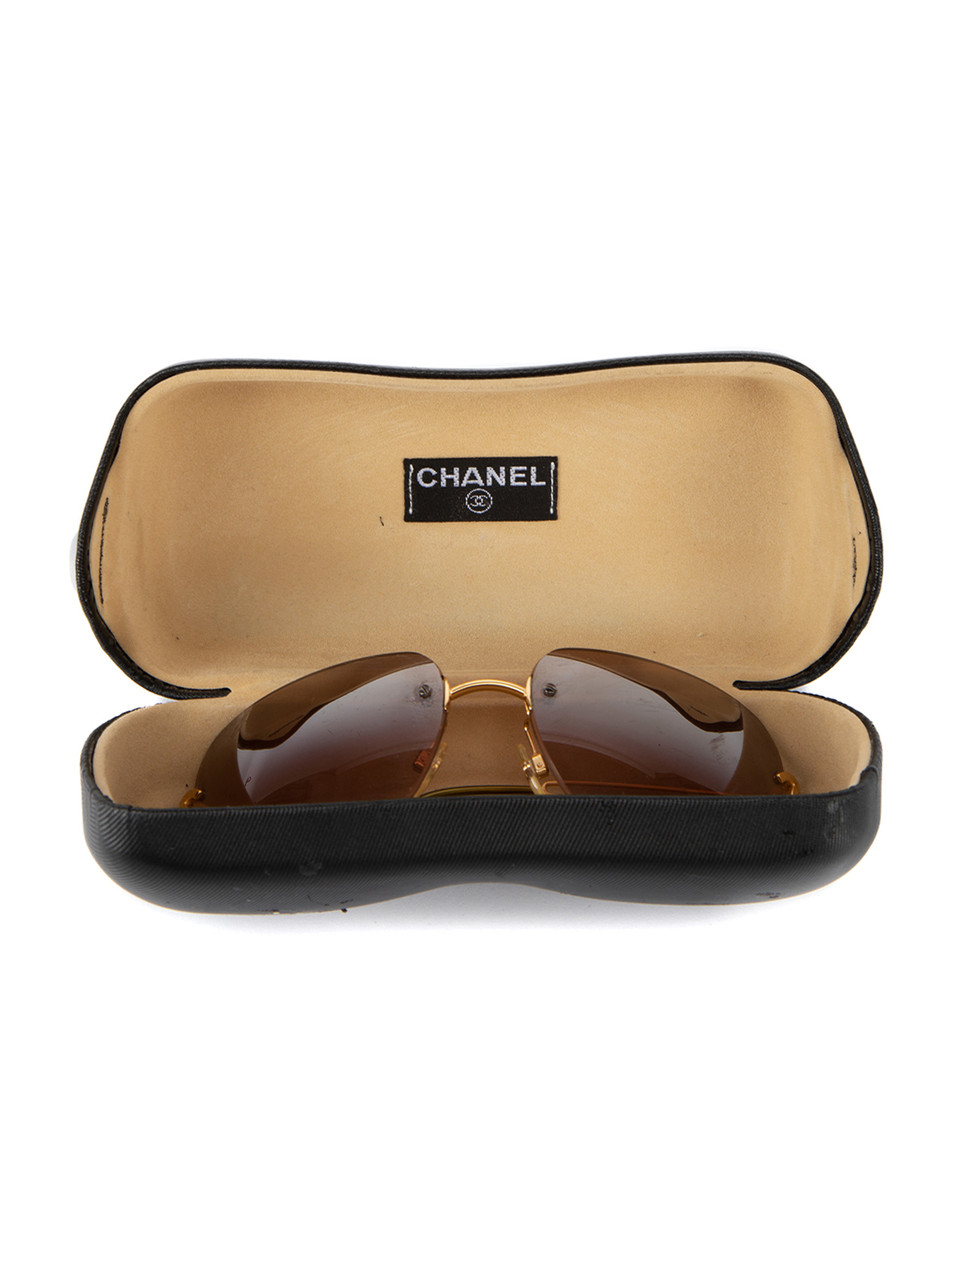 Chanel Rectangular Sunglasses